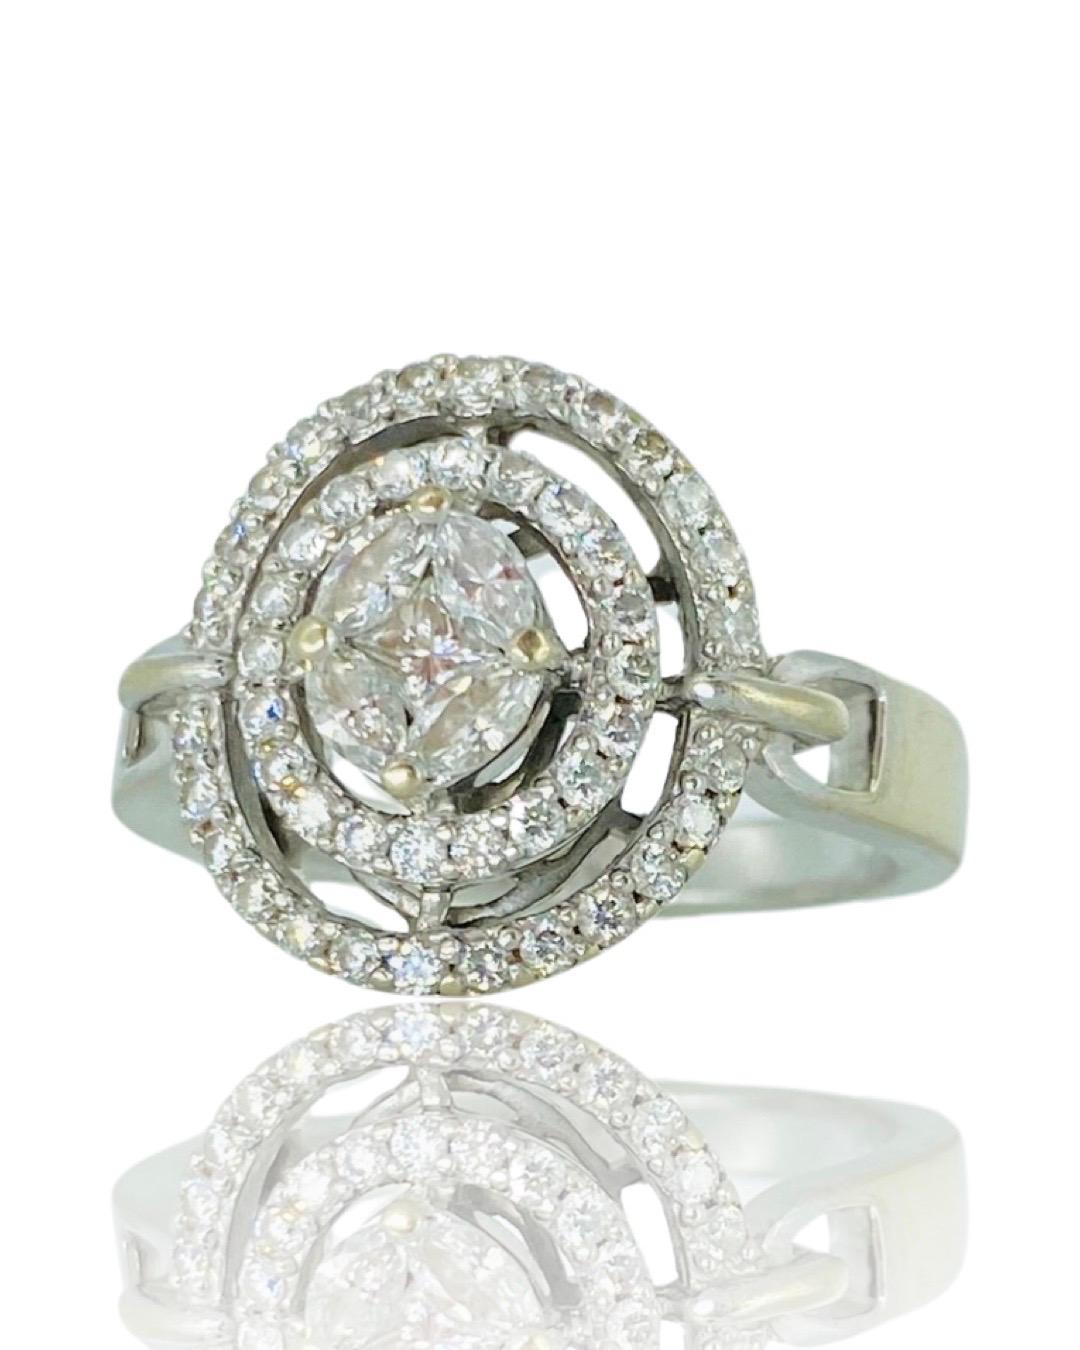 Diamond Line 0.71 Carat Diamond Double Halo Ring 18k White Gold In Good Condition For Sale In Miami, FL